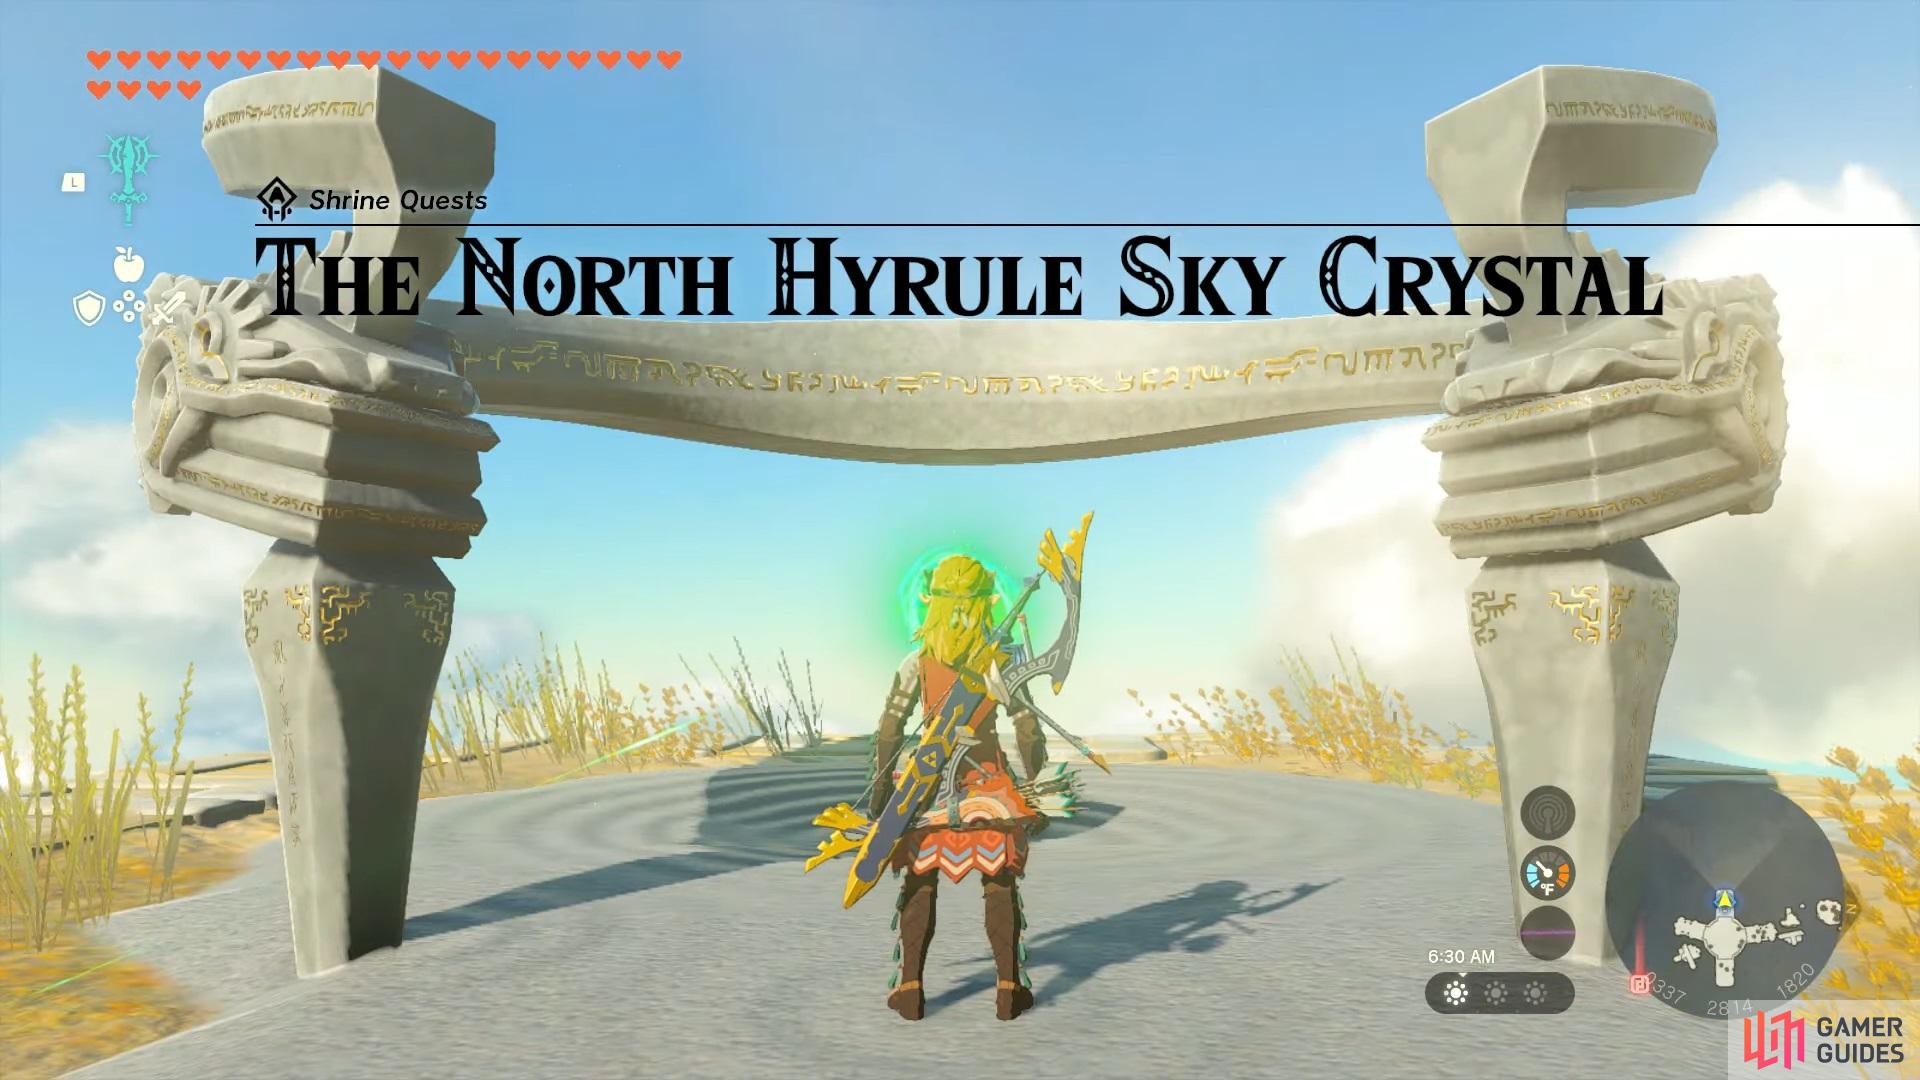 !The North Hyrule Sky Crystal Shrine Quest